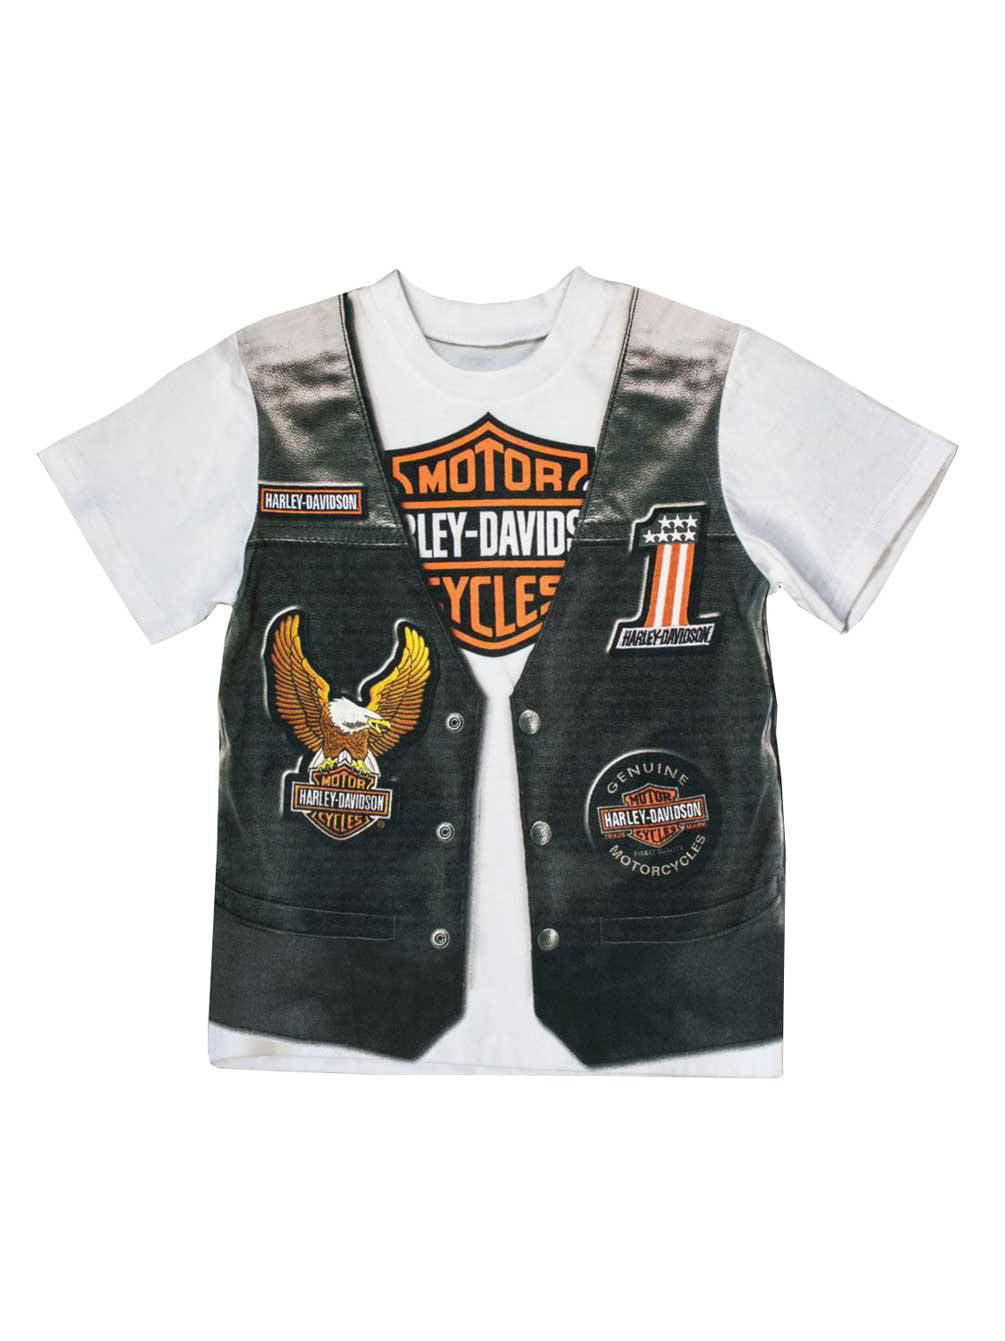 Harley-Davidson Shirt Biker Short Sleeves Kids  Black/Gray/Orange 5-7 Years Old 